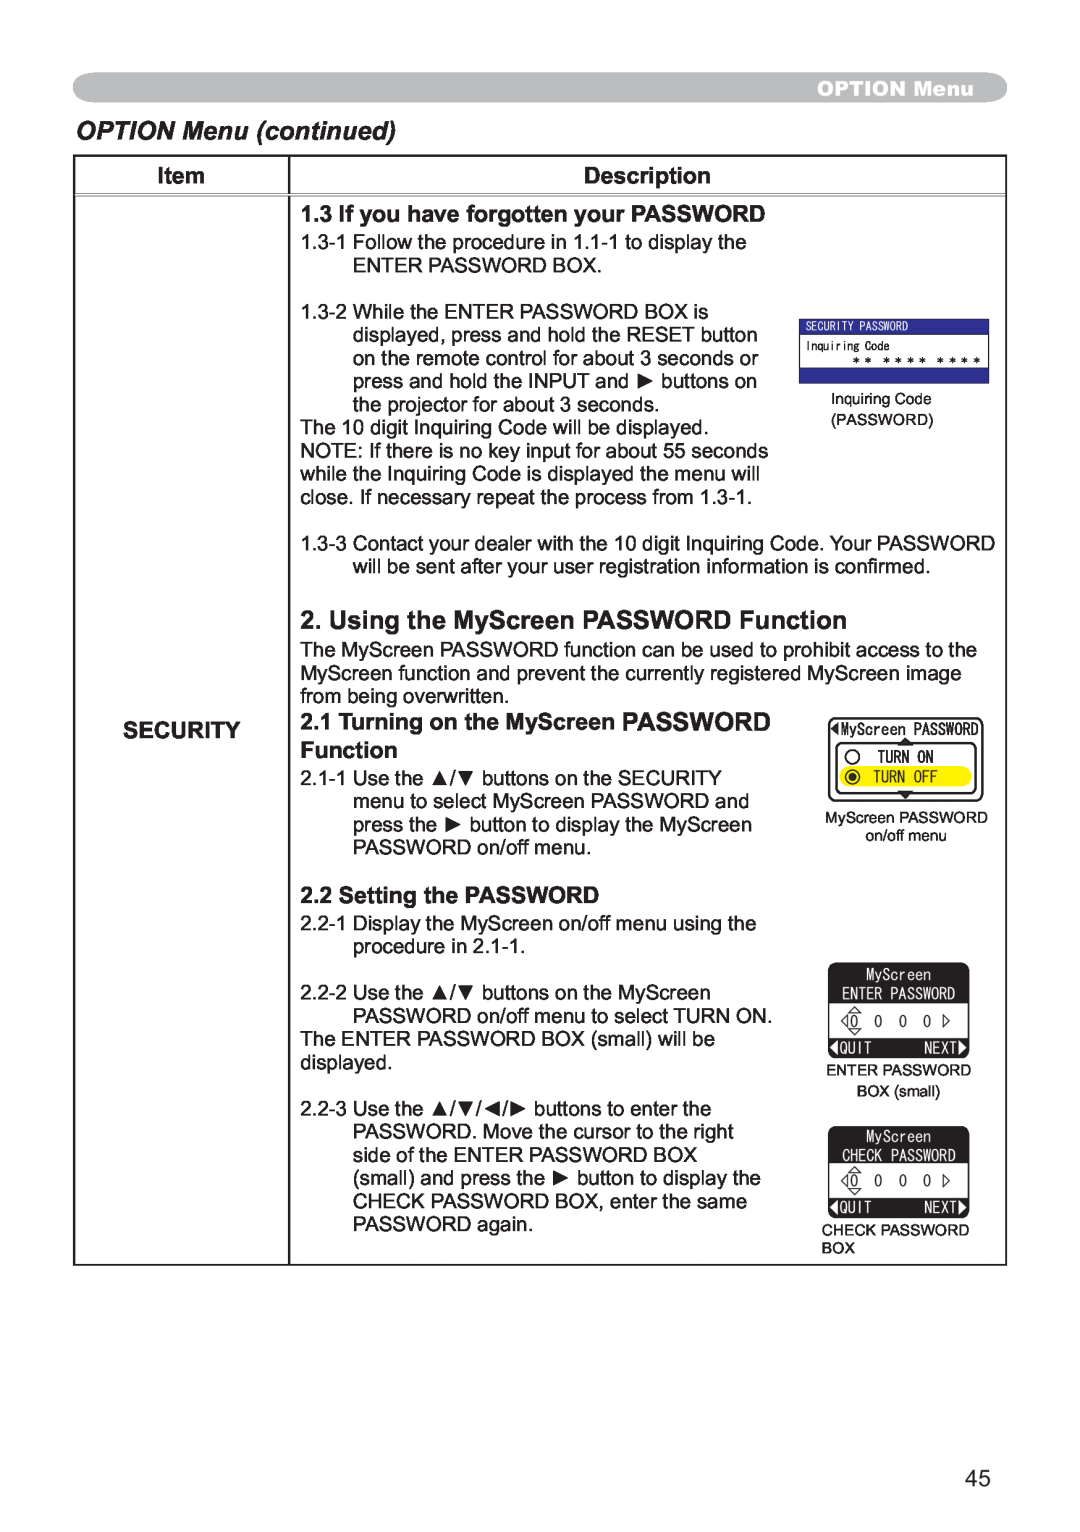 Hitachi ED-X12 user manual Using the MyScreen PASSWORD Function, OPTION Menu continued, Item, Description, Security 